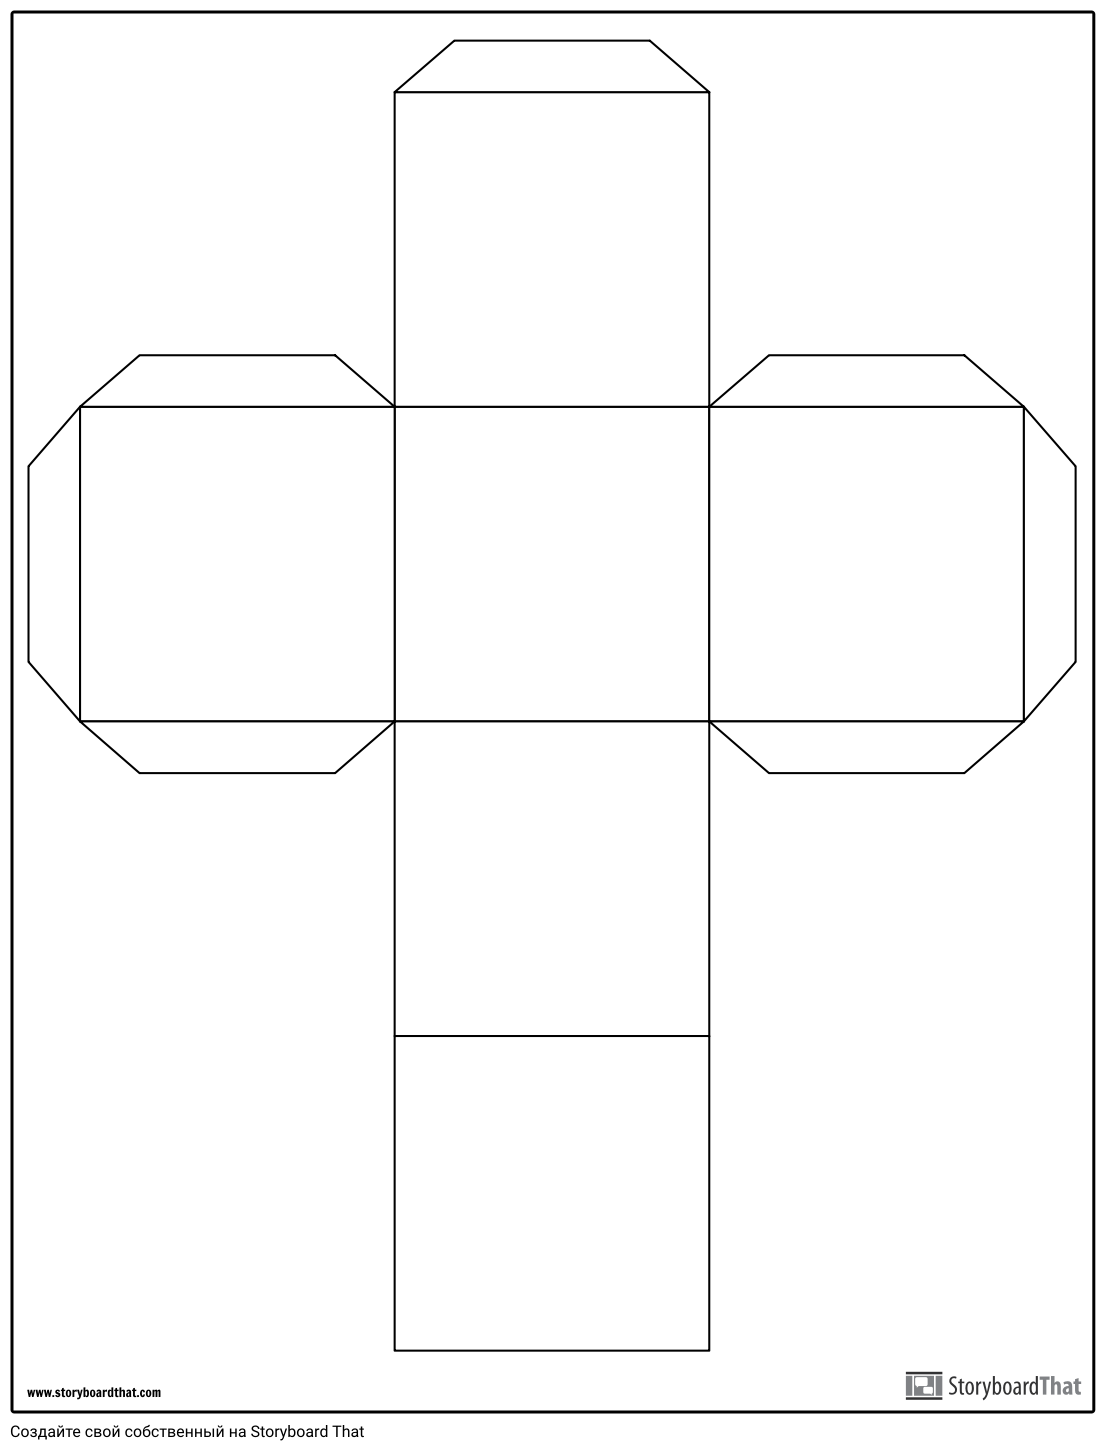 cube-ru-examples